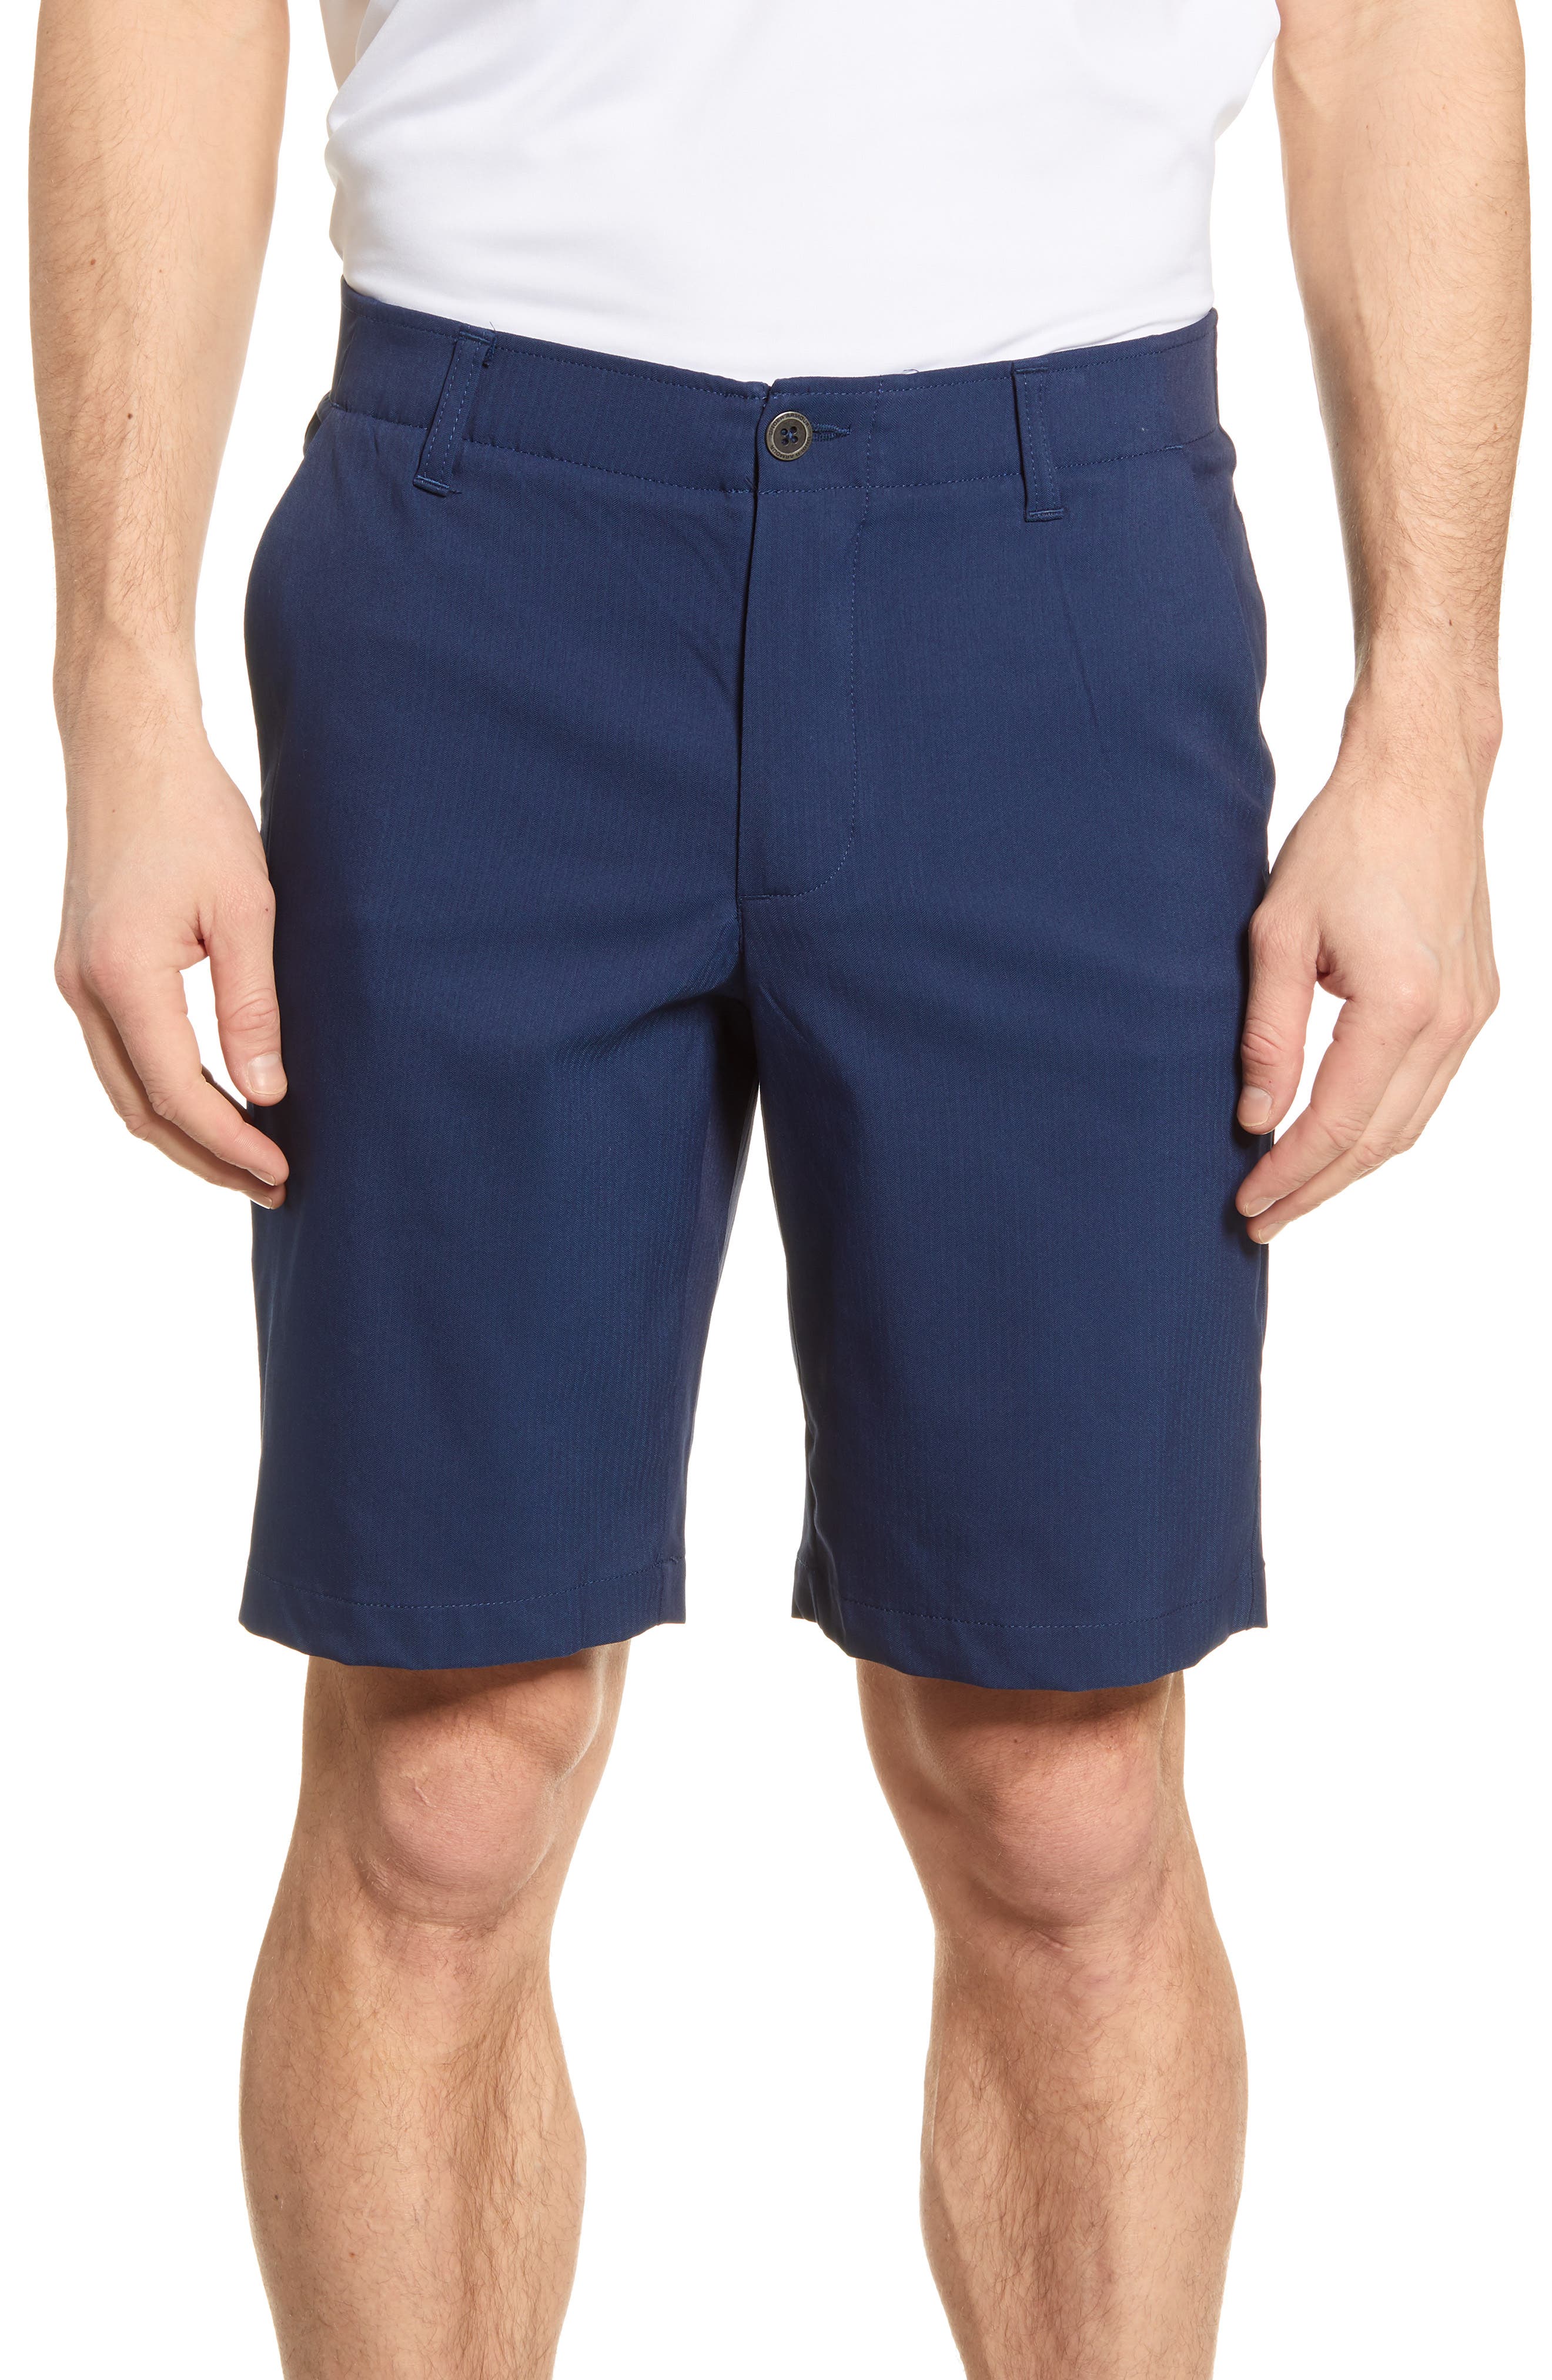 men's under armour dress shorts